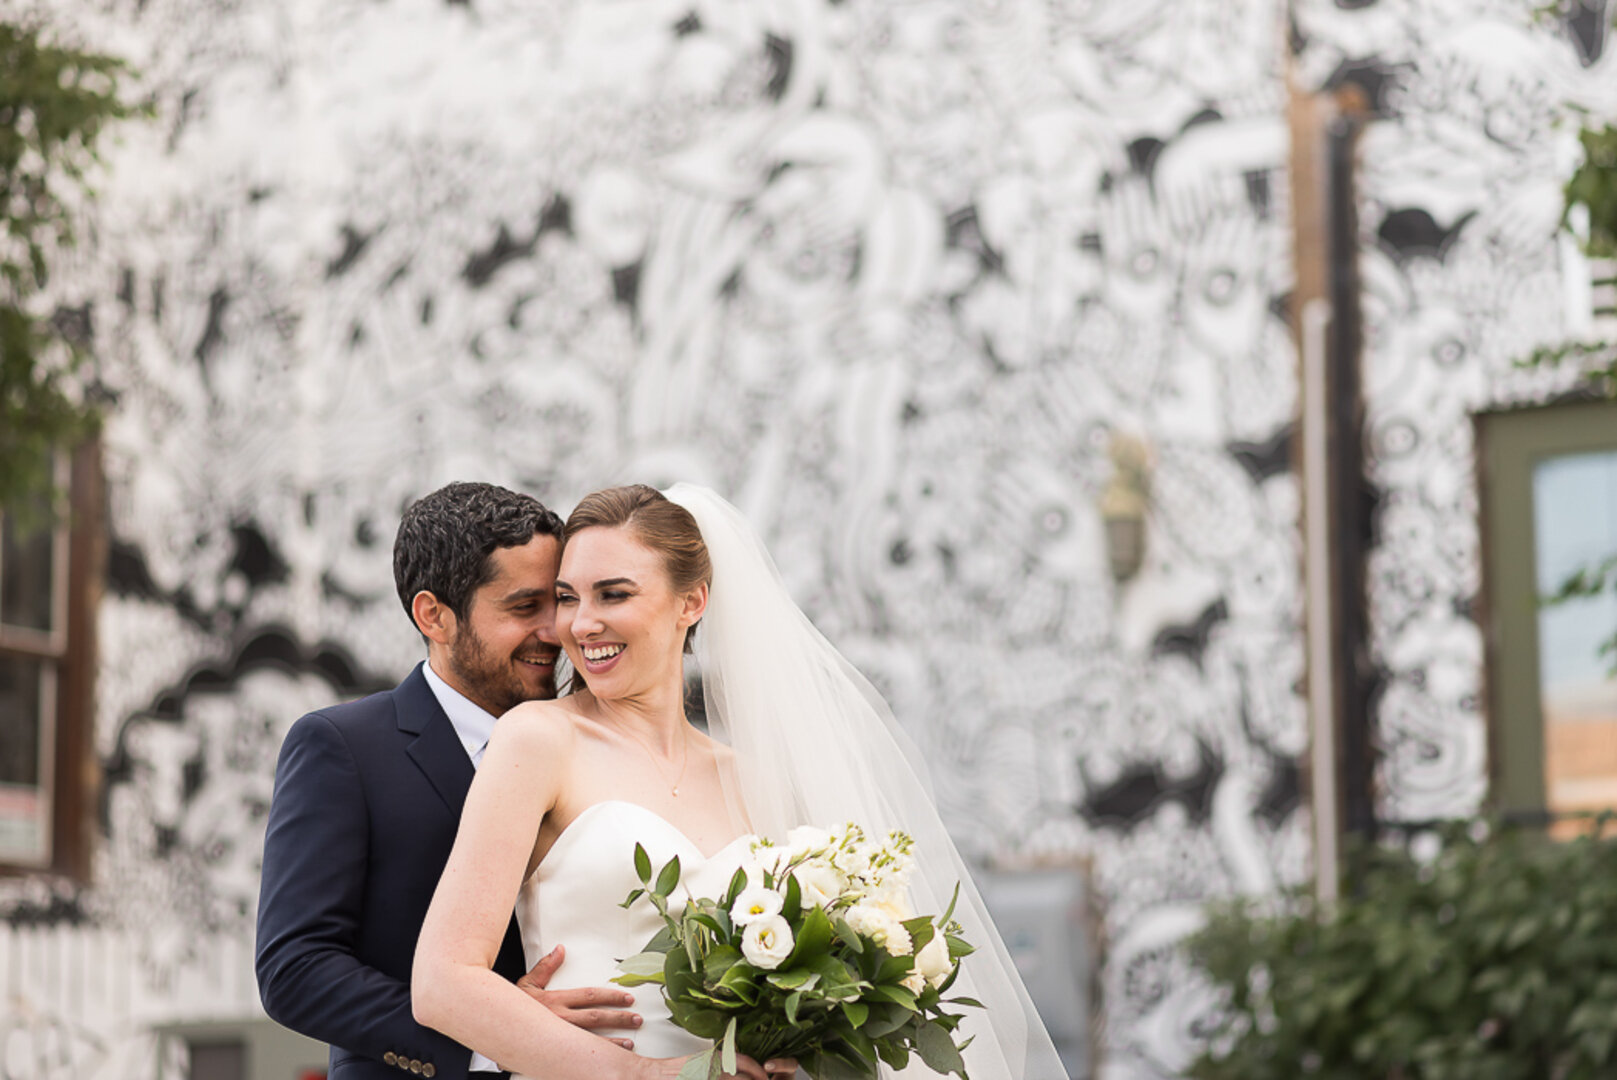 Romantic Wedding Photography: Lacuna Lofts Modern Day Jewish Wedding captured by Ashley Hamm Photography. See more modern wedding ideas at CHItheeWED.com!